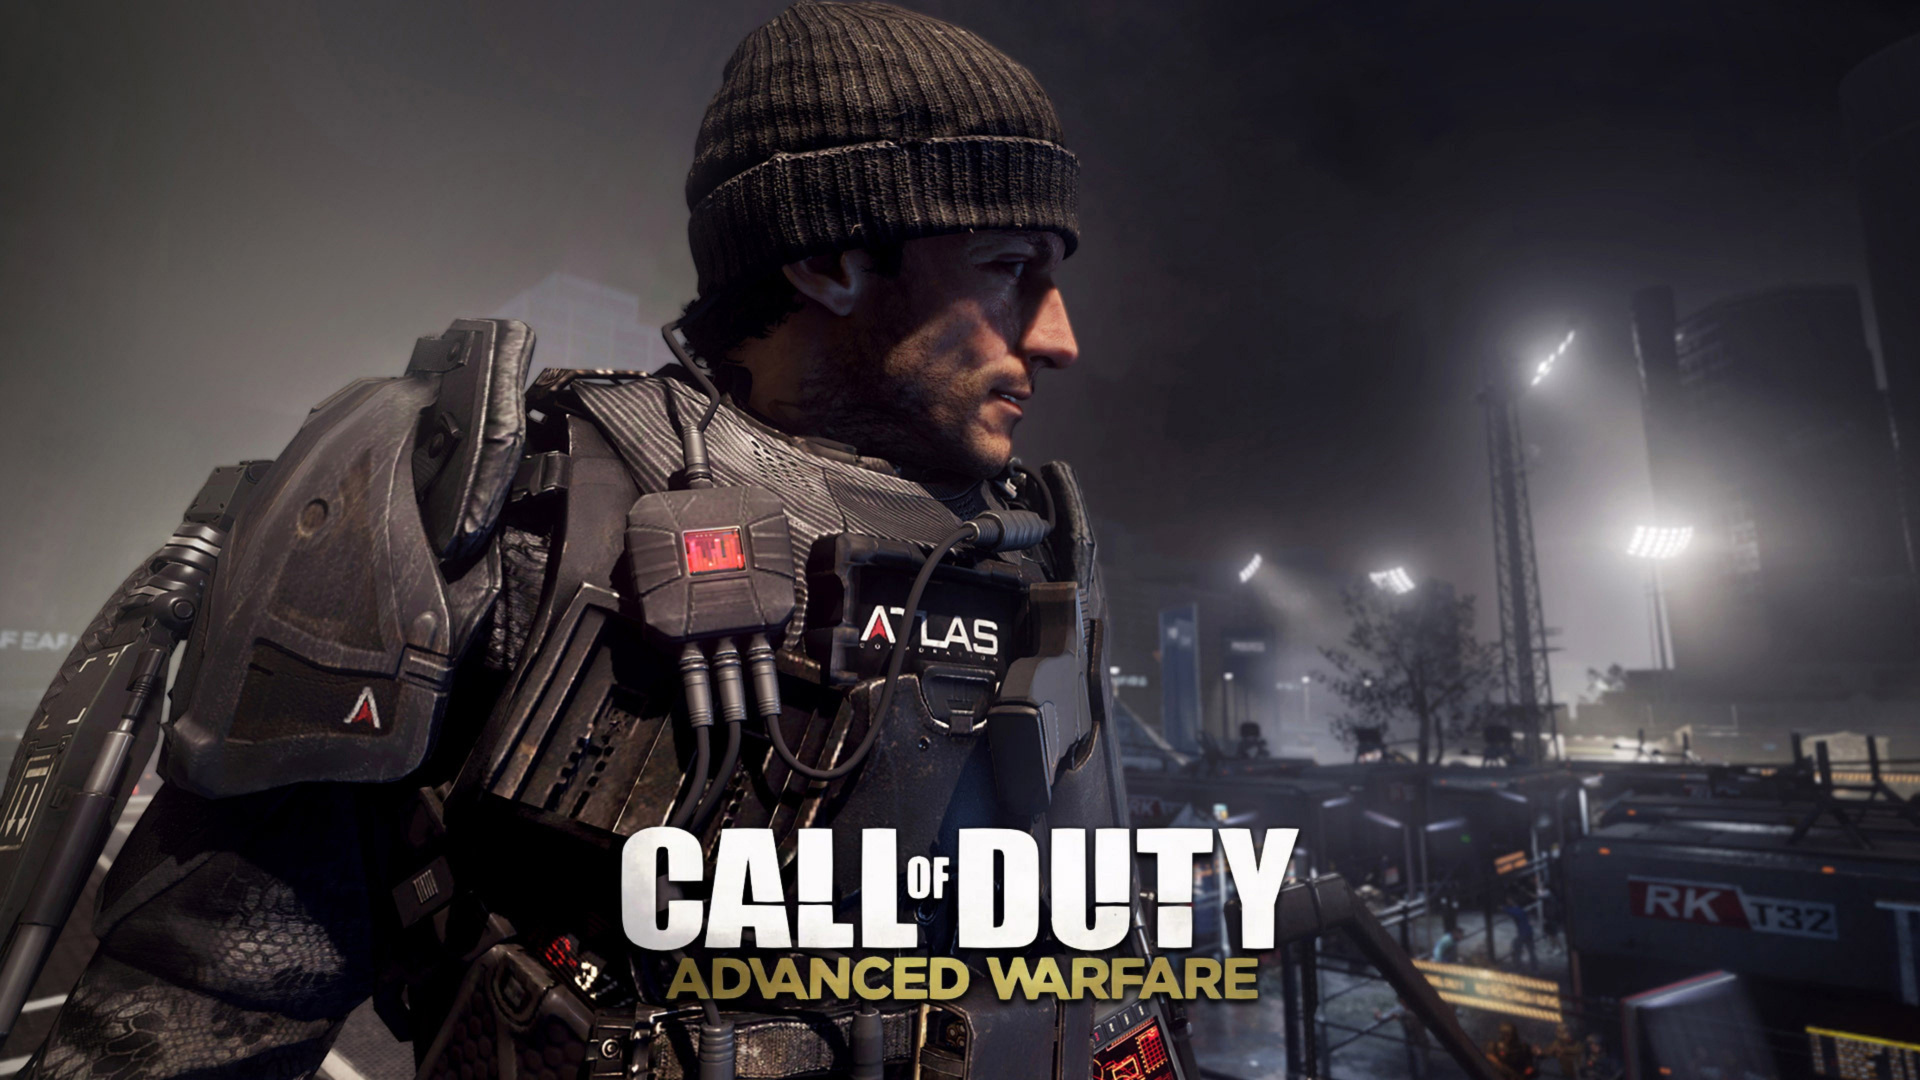 Call of Duty Advanced Warfare, Sledgehammer Games, Multiplayer-video-Spiel, Pc-Spiel, Soldat. Wallpaper in 1920x1080 Resolution